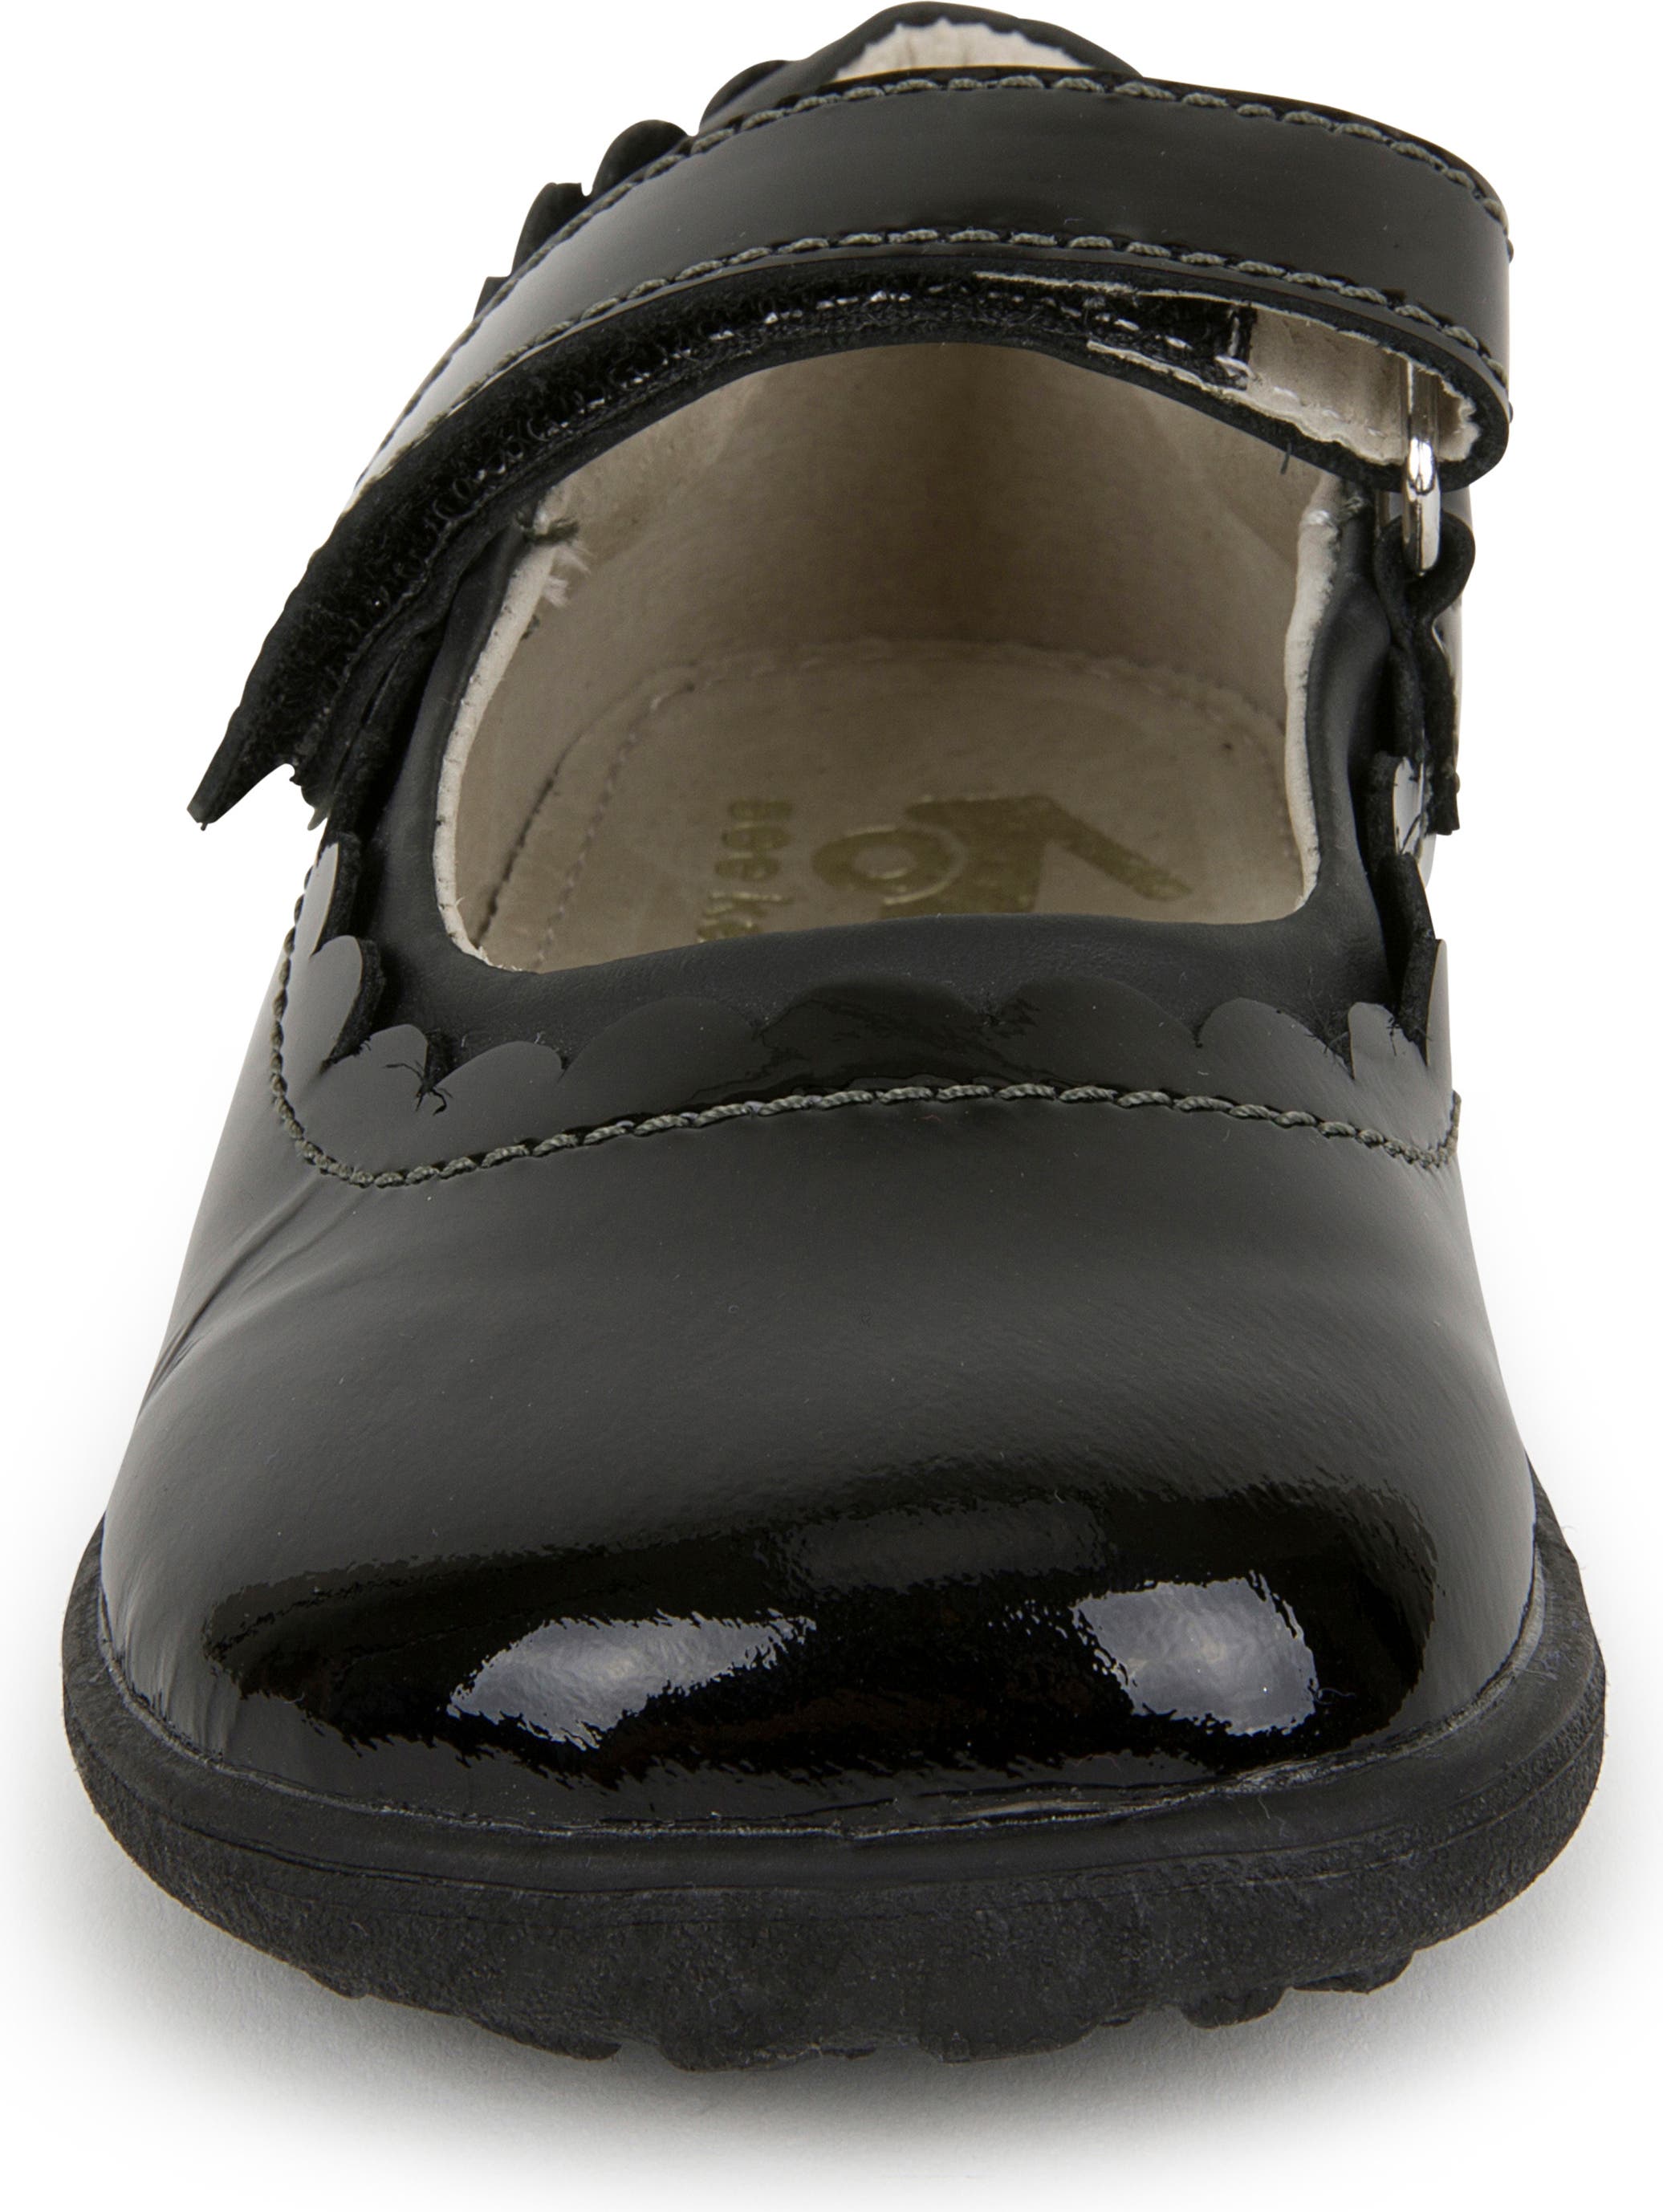 Girls Black Patent Mary Jane School Shoes Size 10 11 12 13 1 2 Hook & Loop 